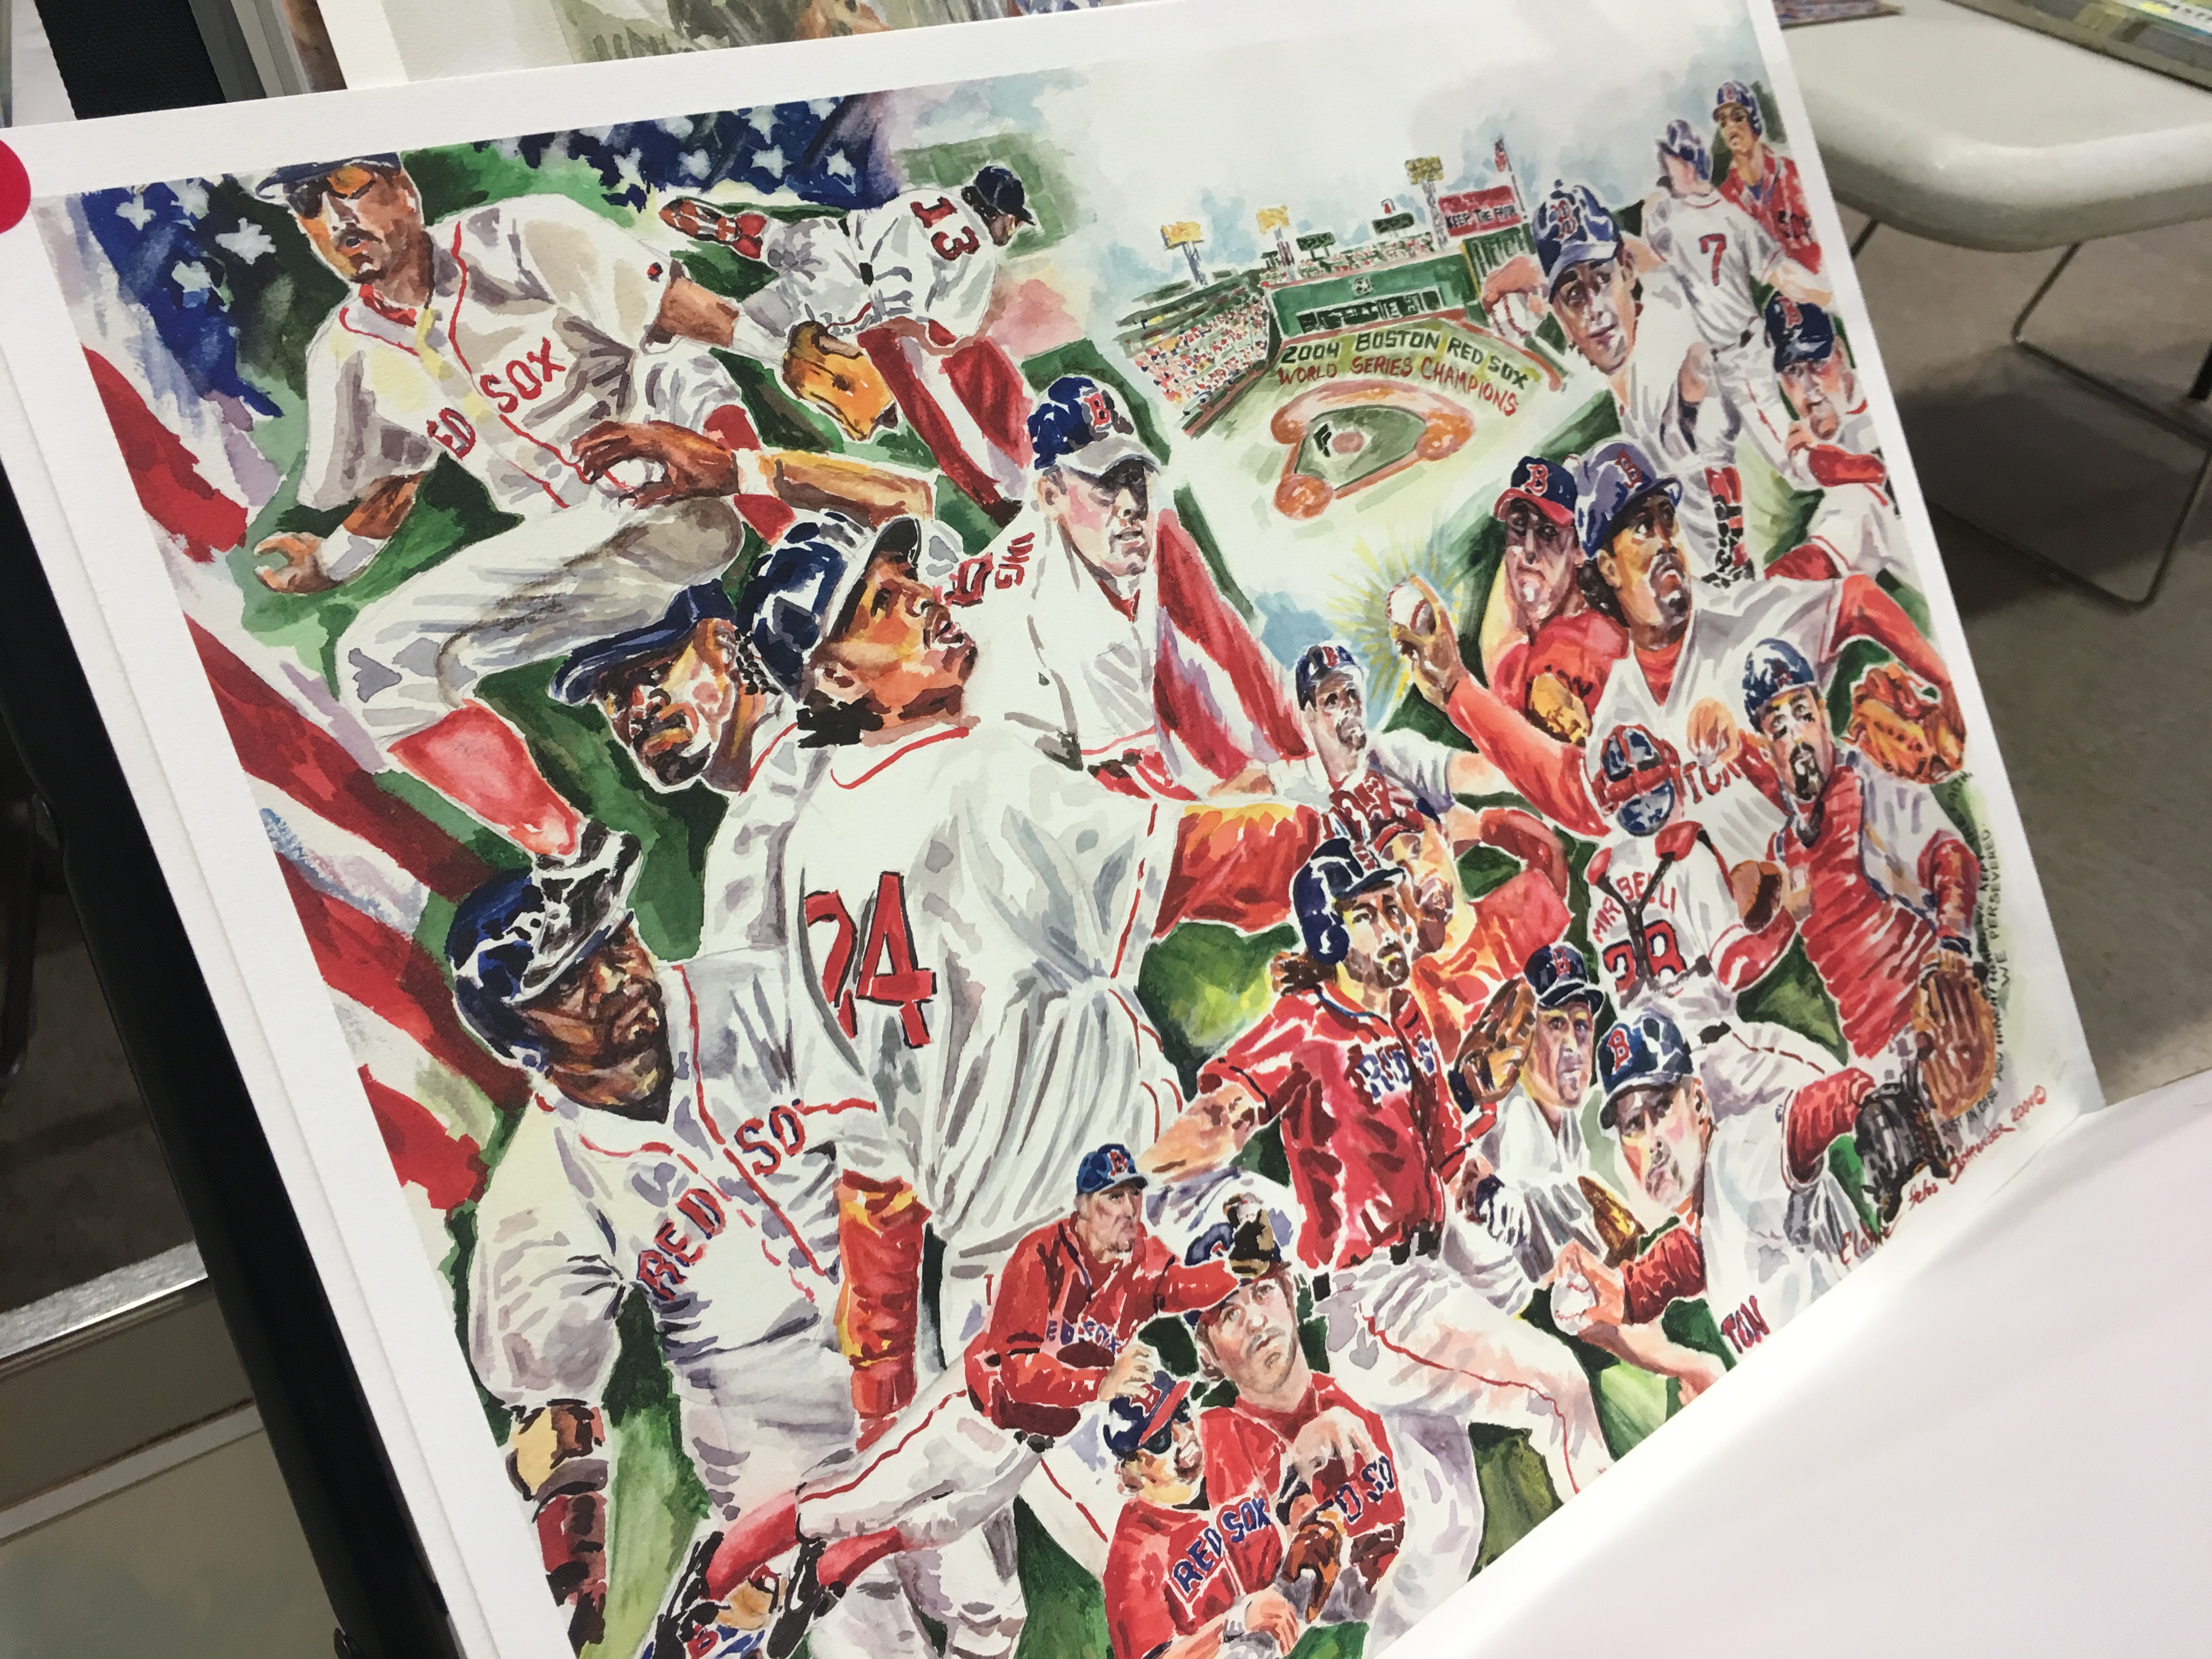 Boston Red Sox prints by Elaine Felos Ostrander